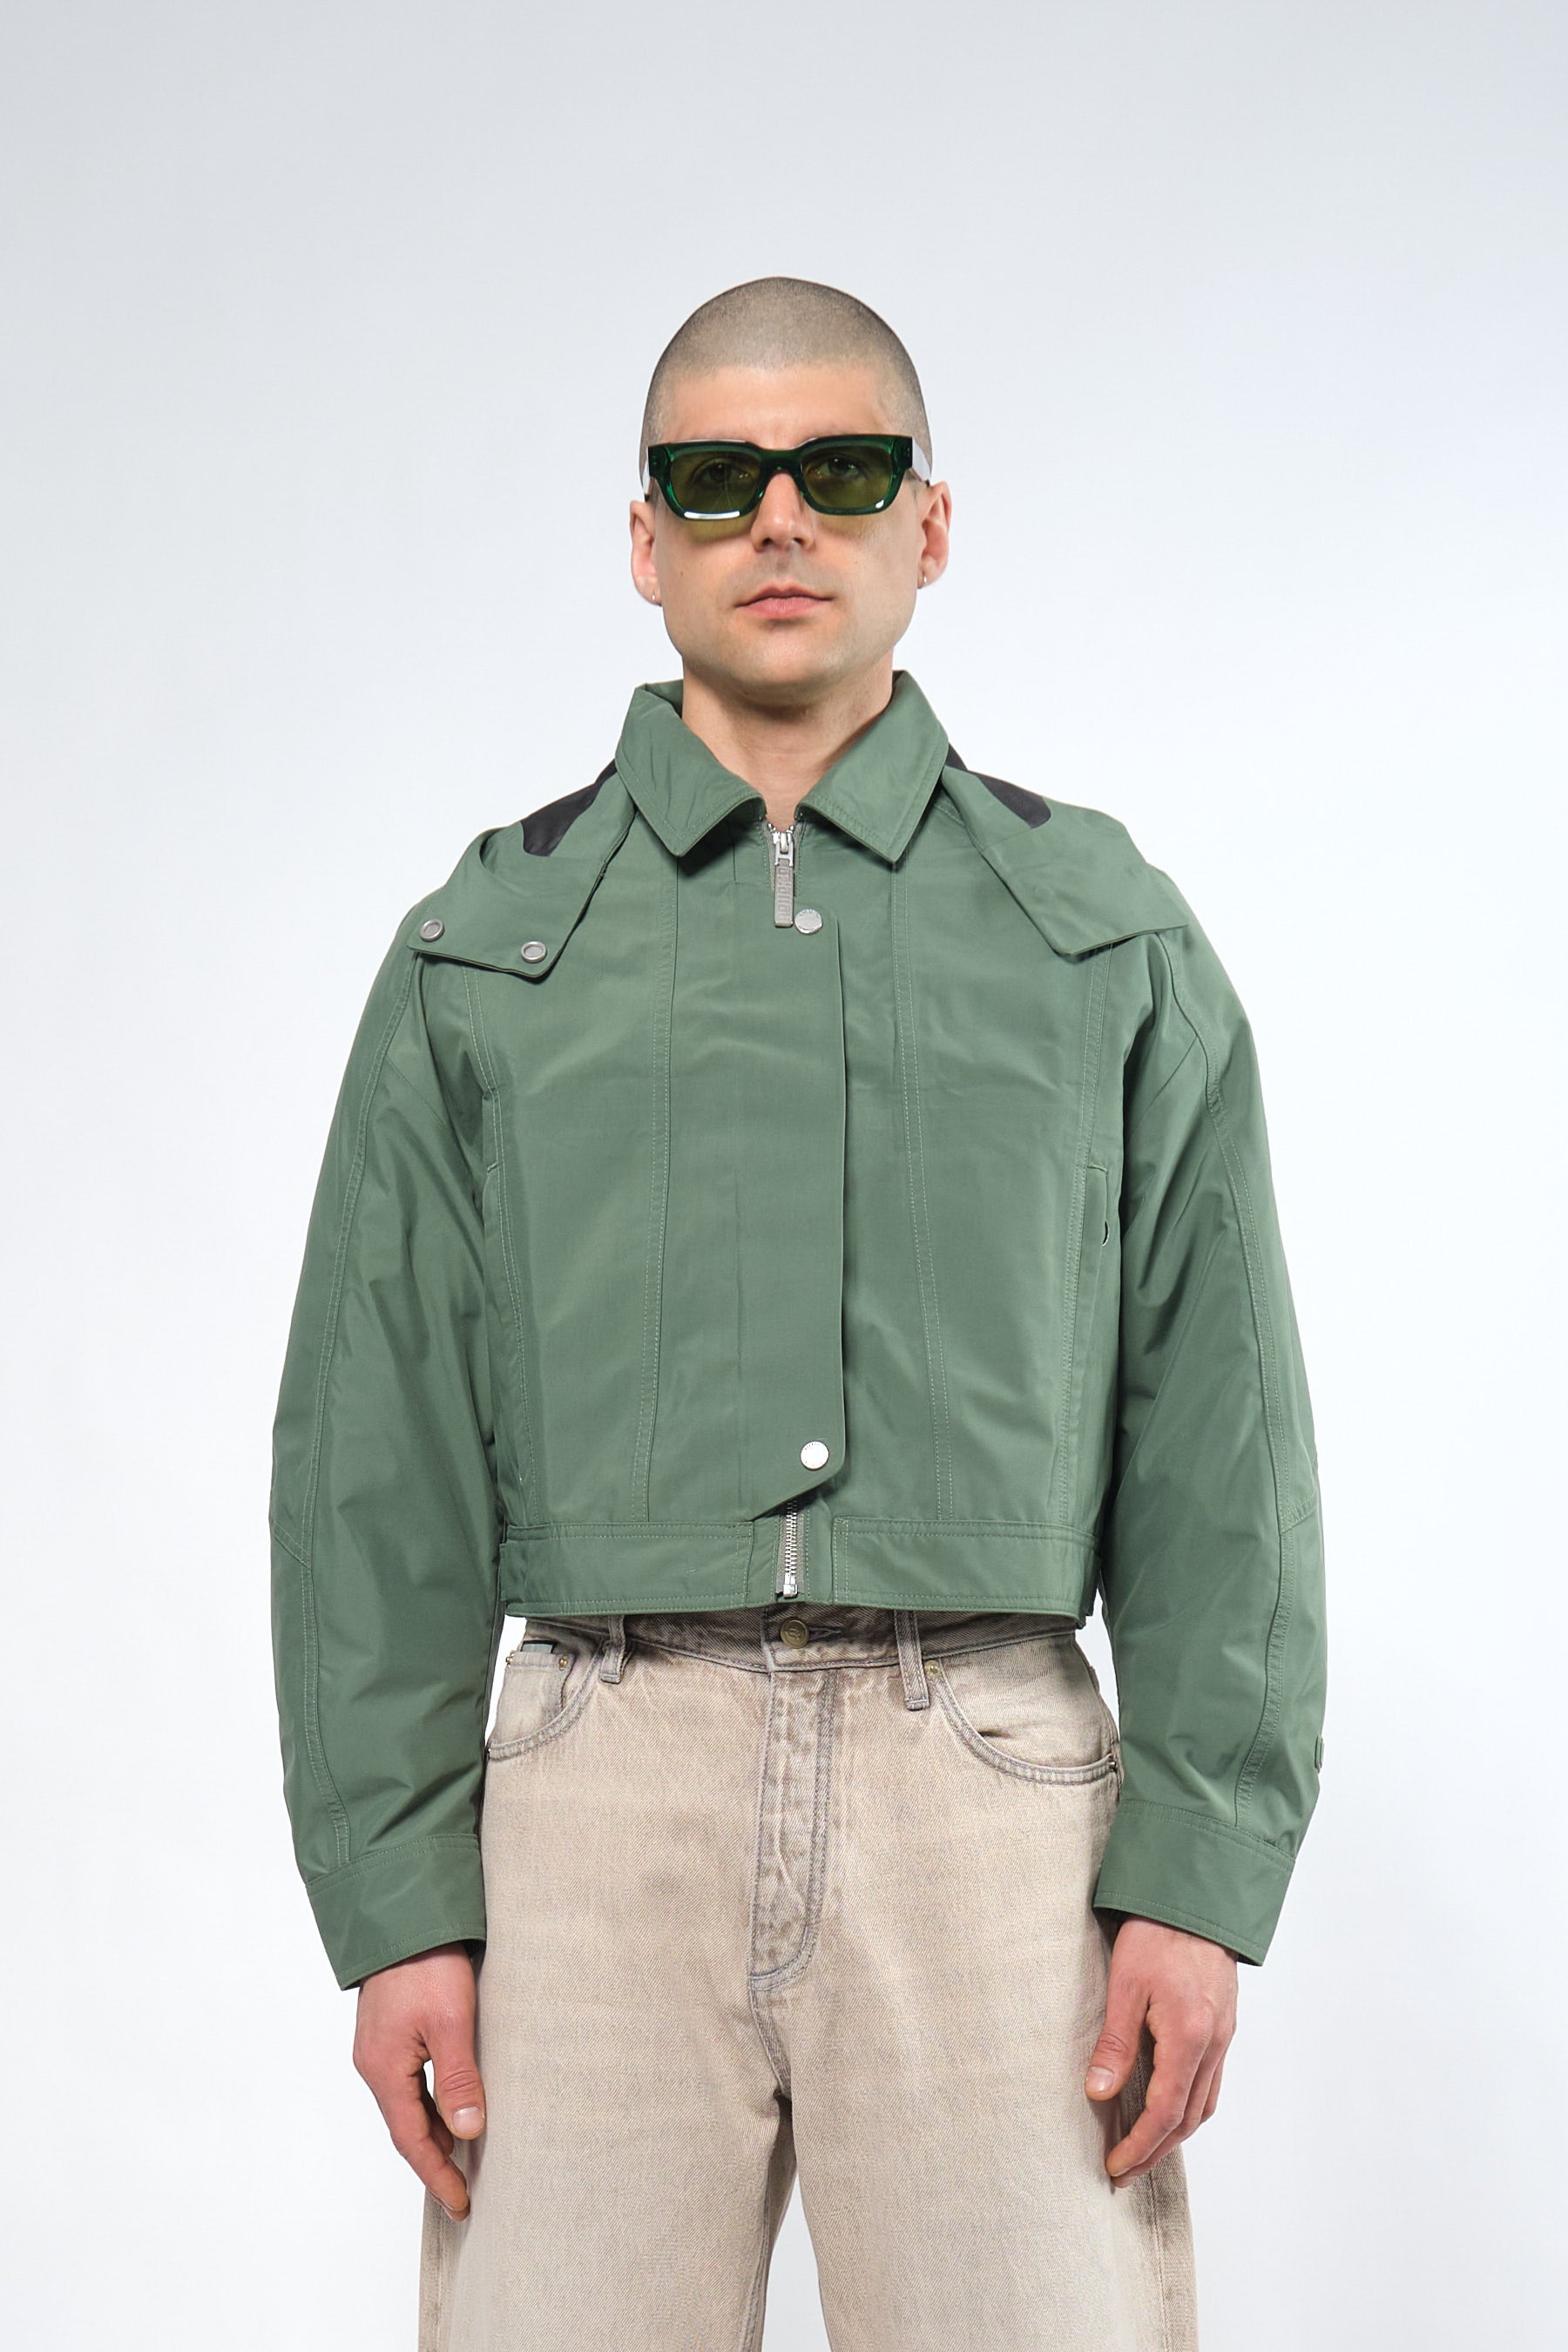  3L Green Waterproof Crop Rain Jacket with Hood - Adhere To  - 3